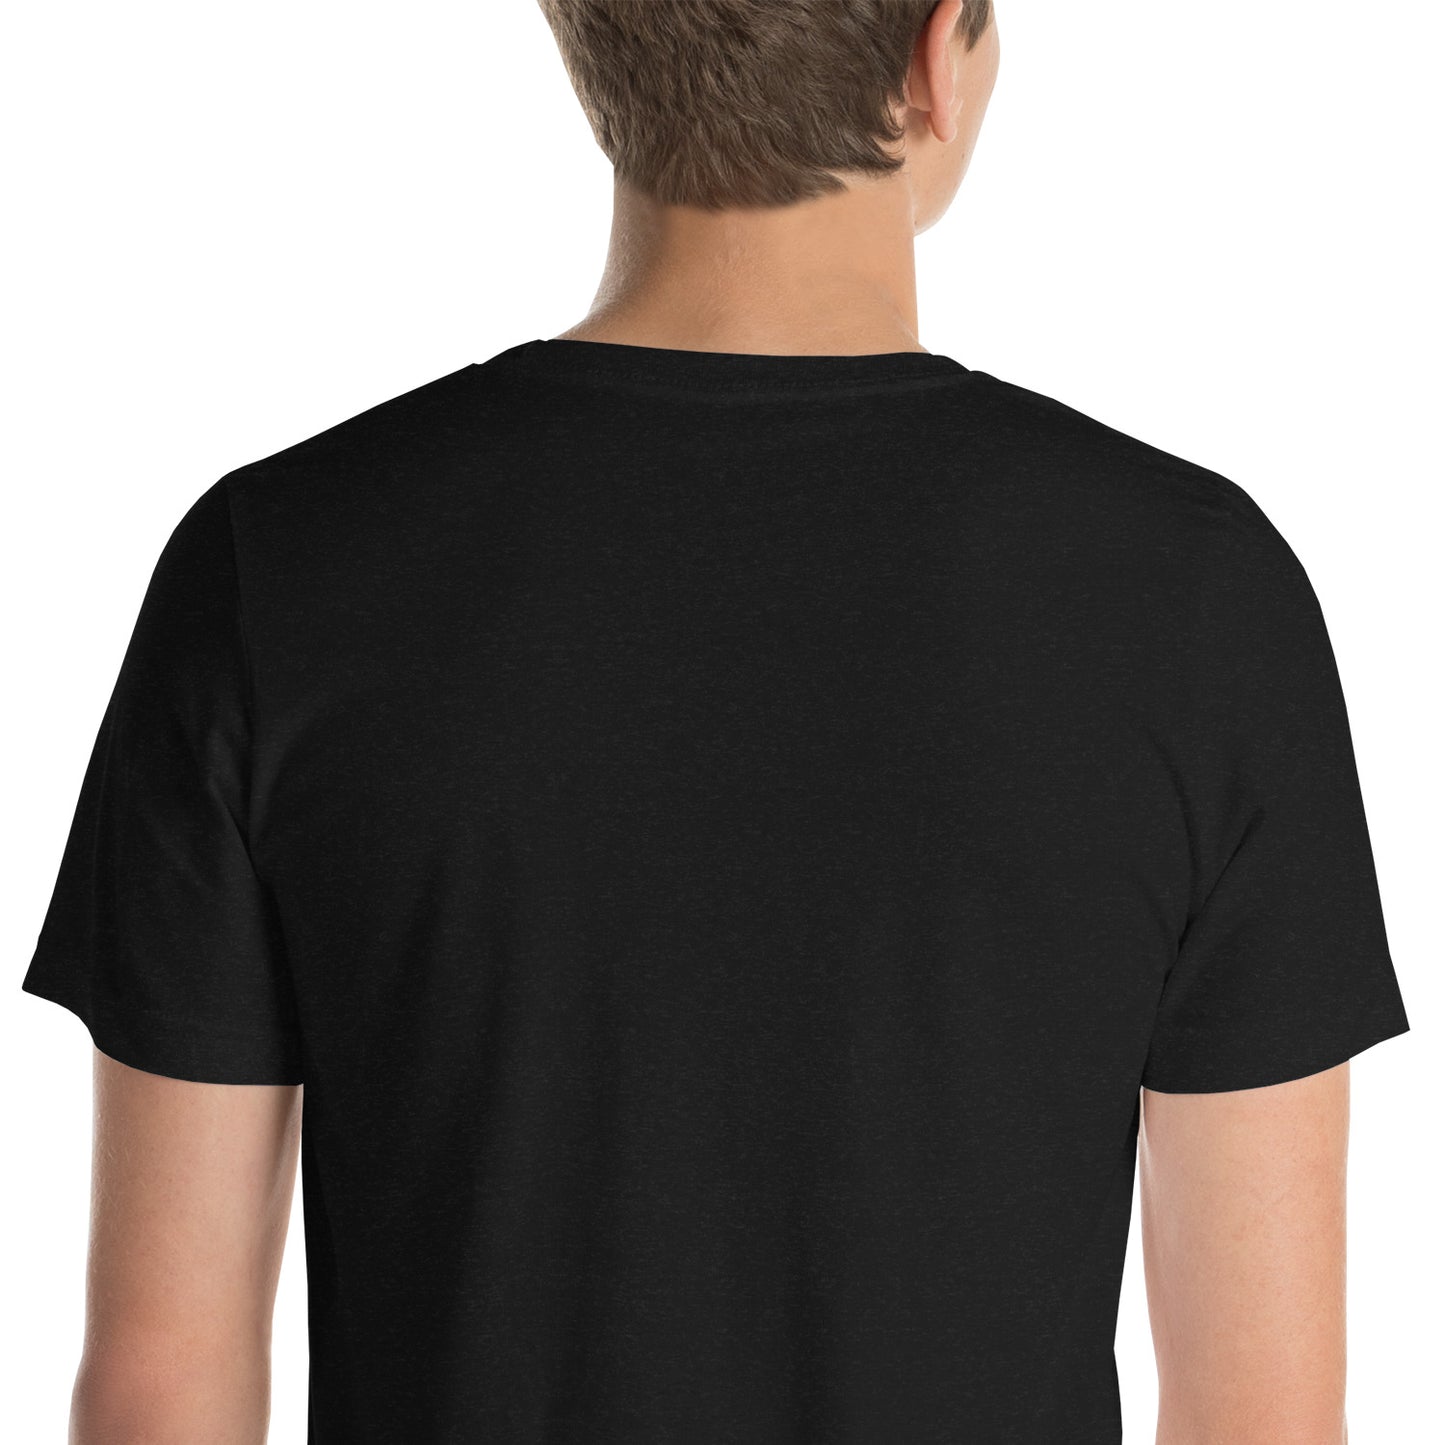 Maui Unisex T-Shirt